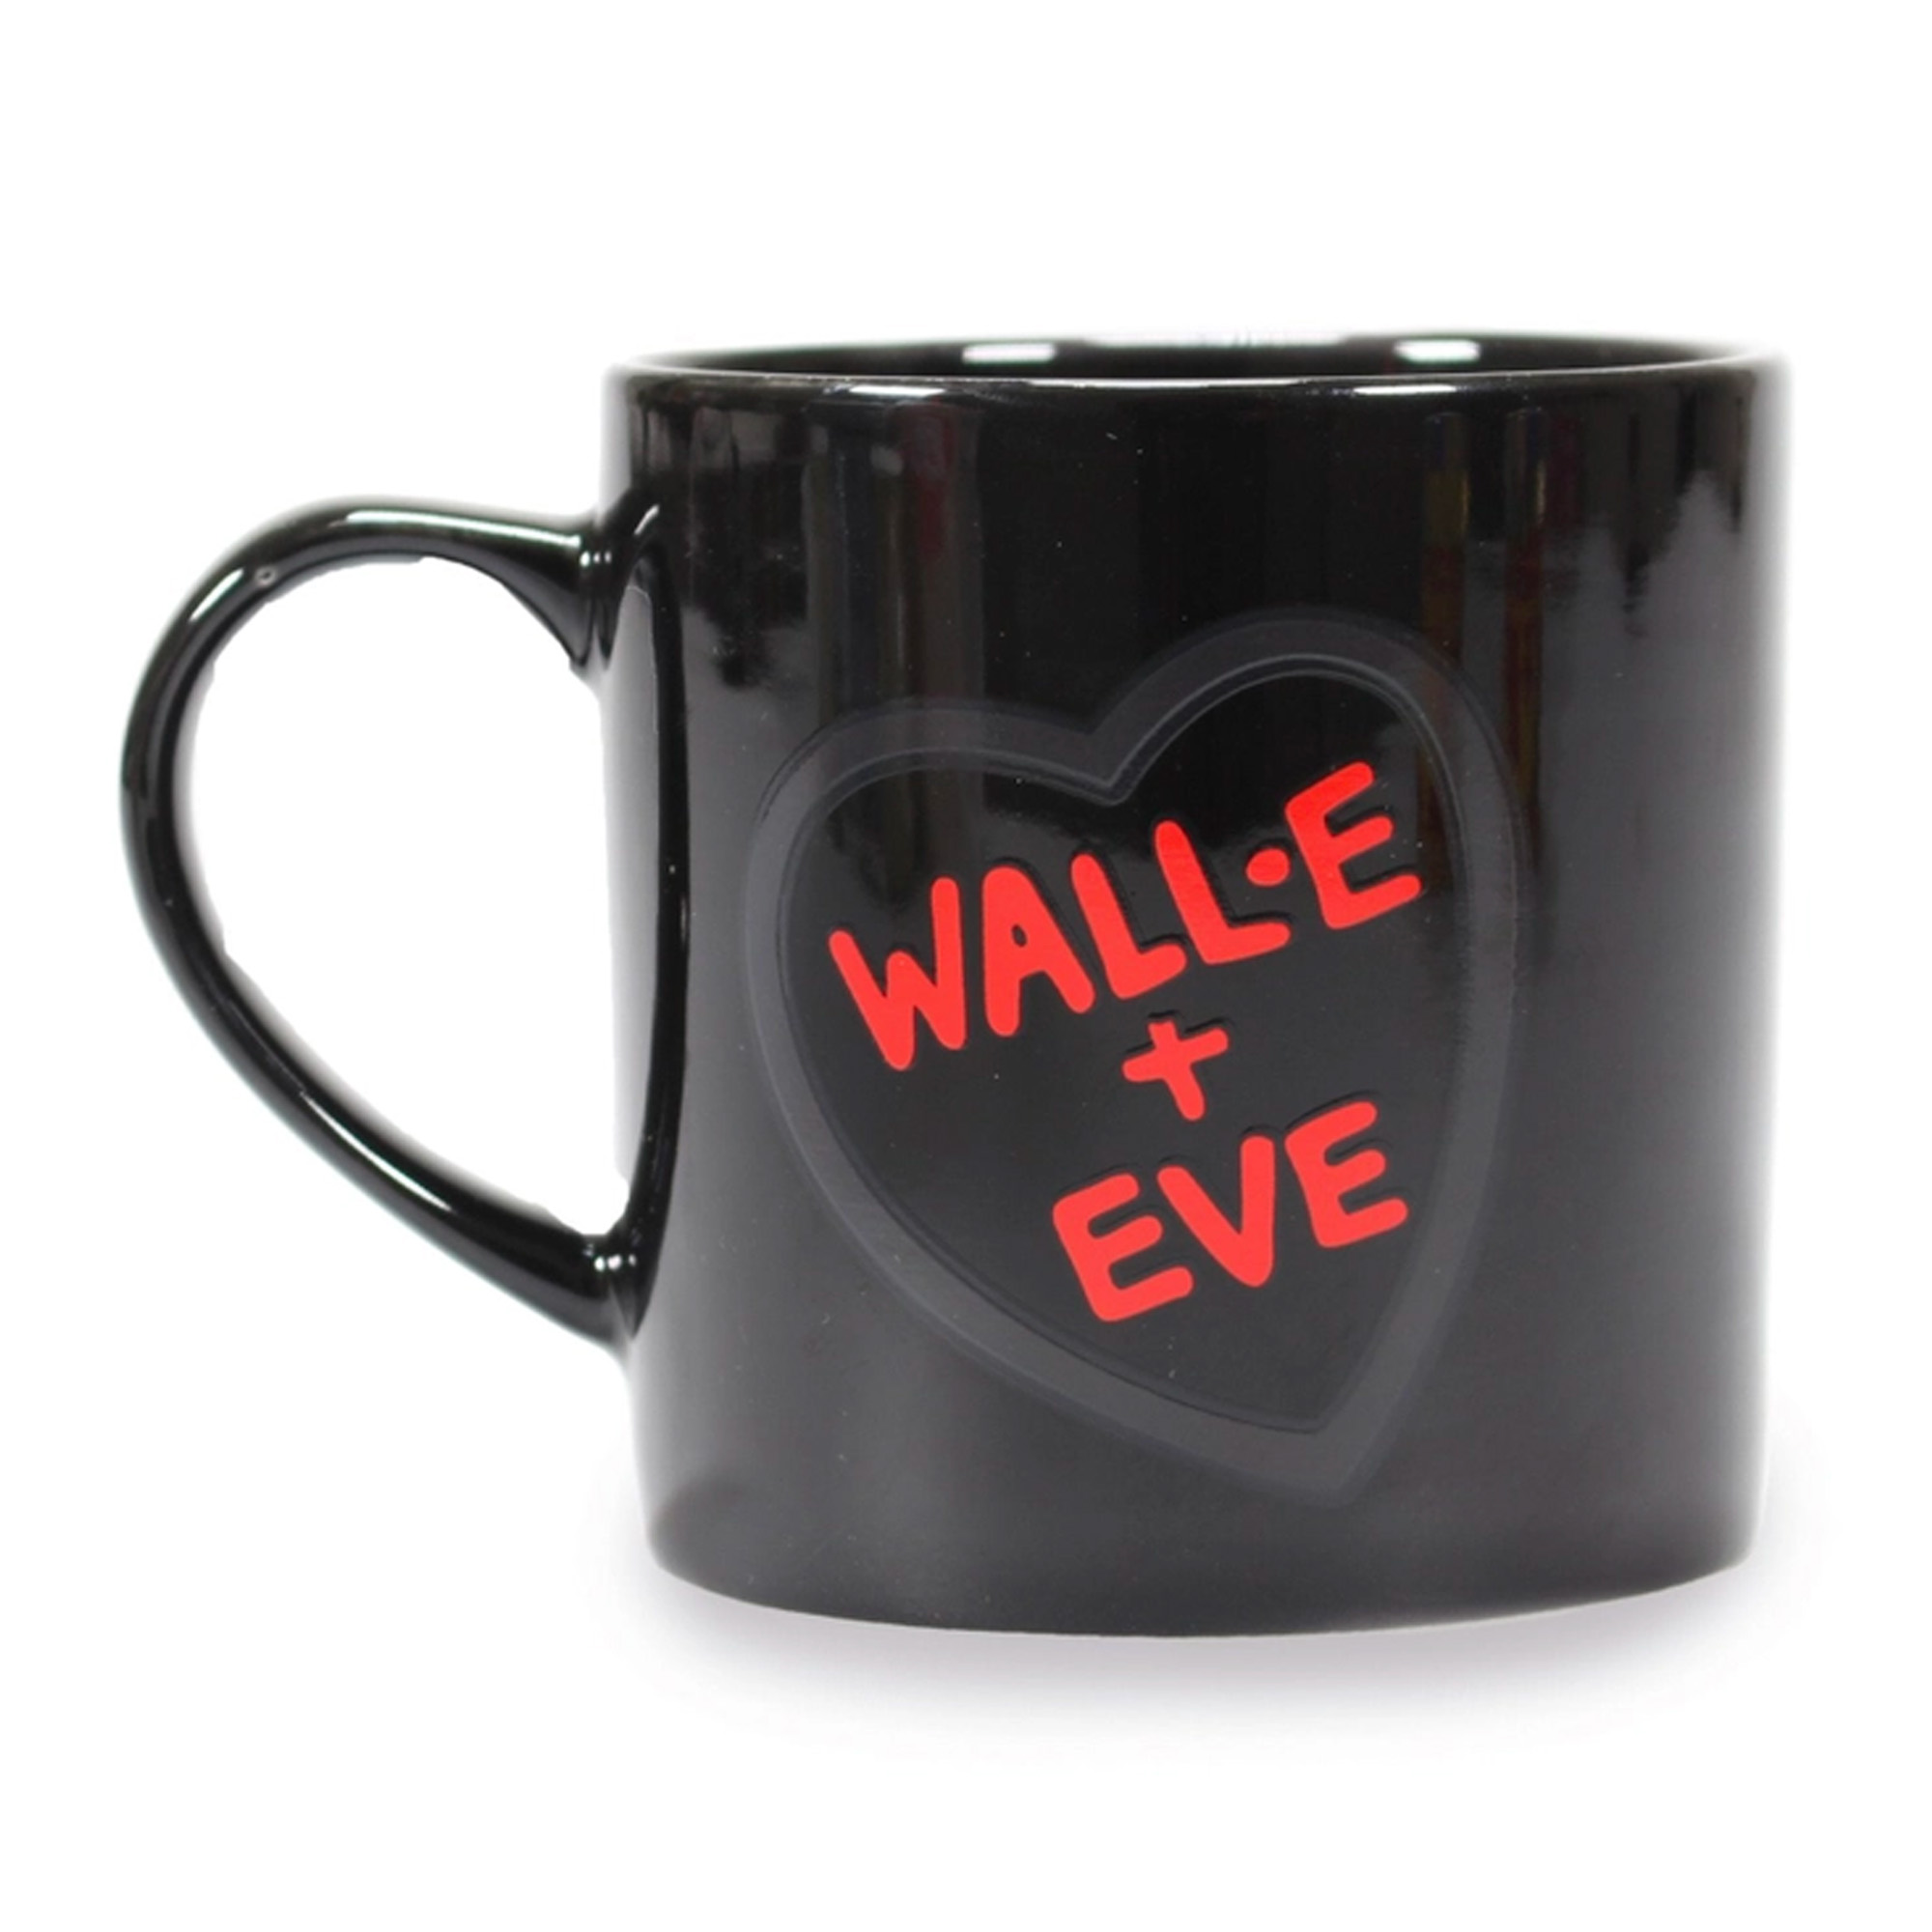 Wall-E + Eve Thermoeffekt Tasse - Disney Wall-E